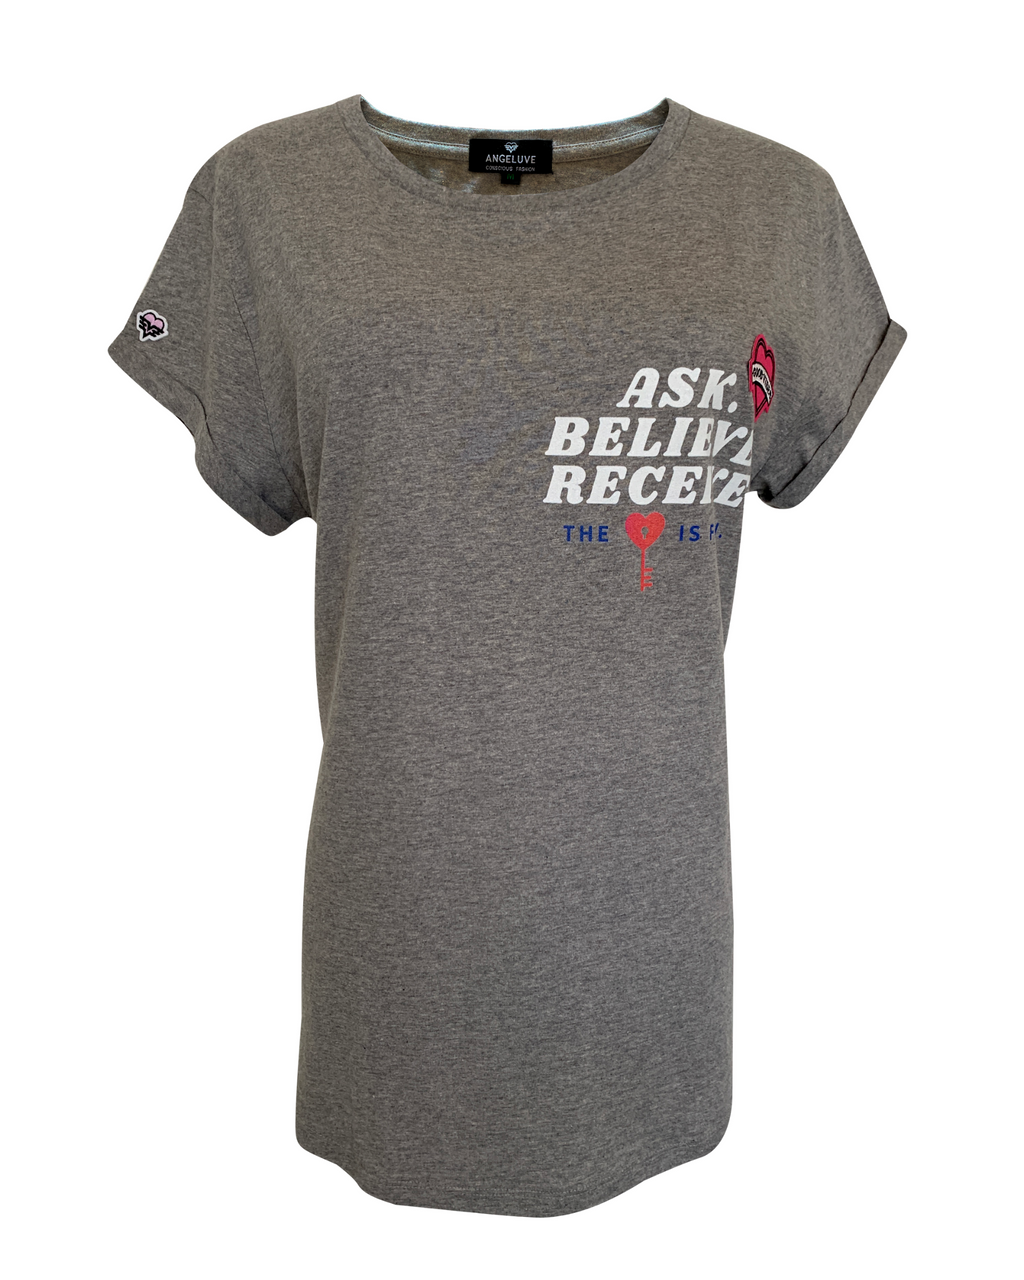 Ask Believe Receive T-shirt - ANGELUVE